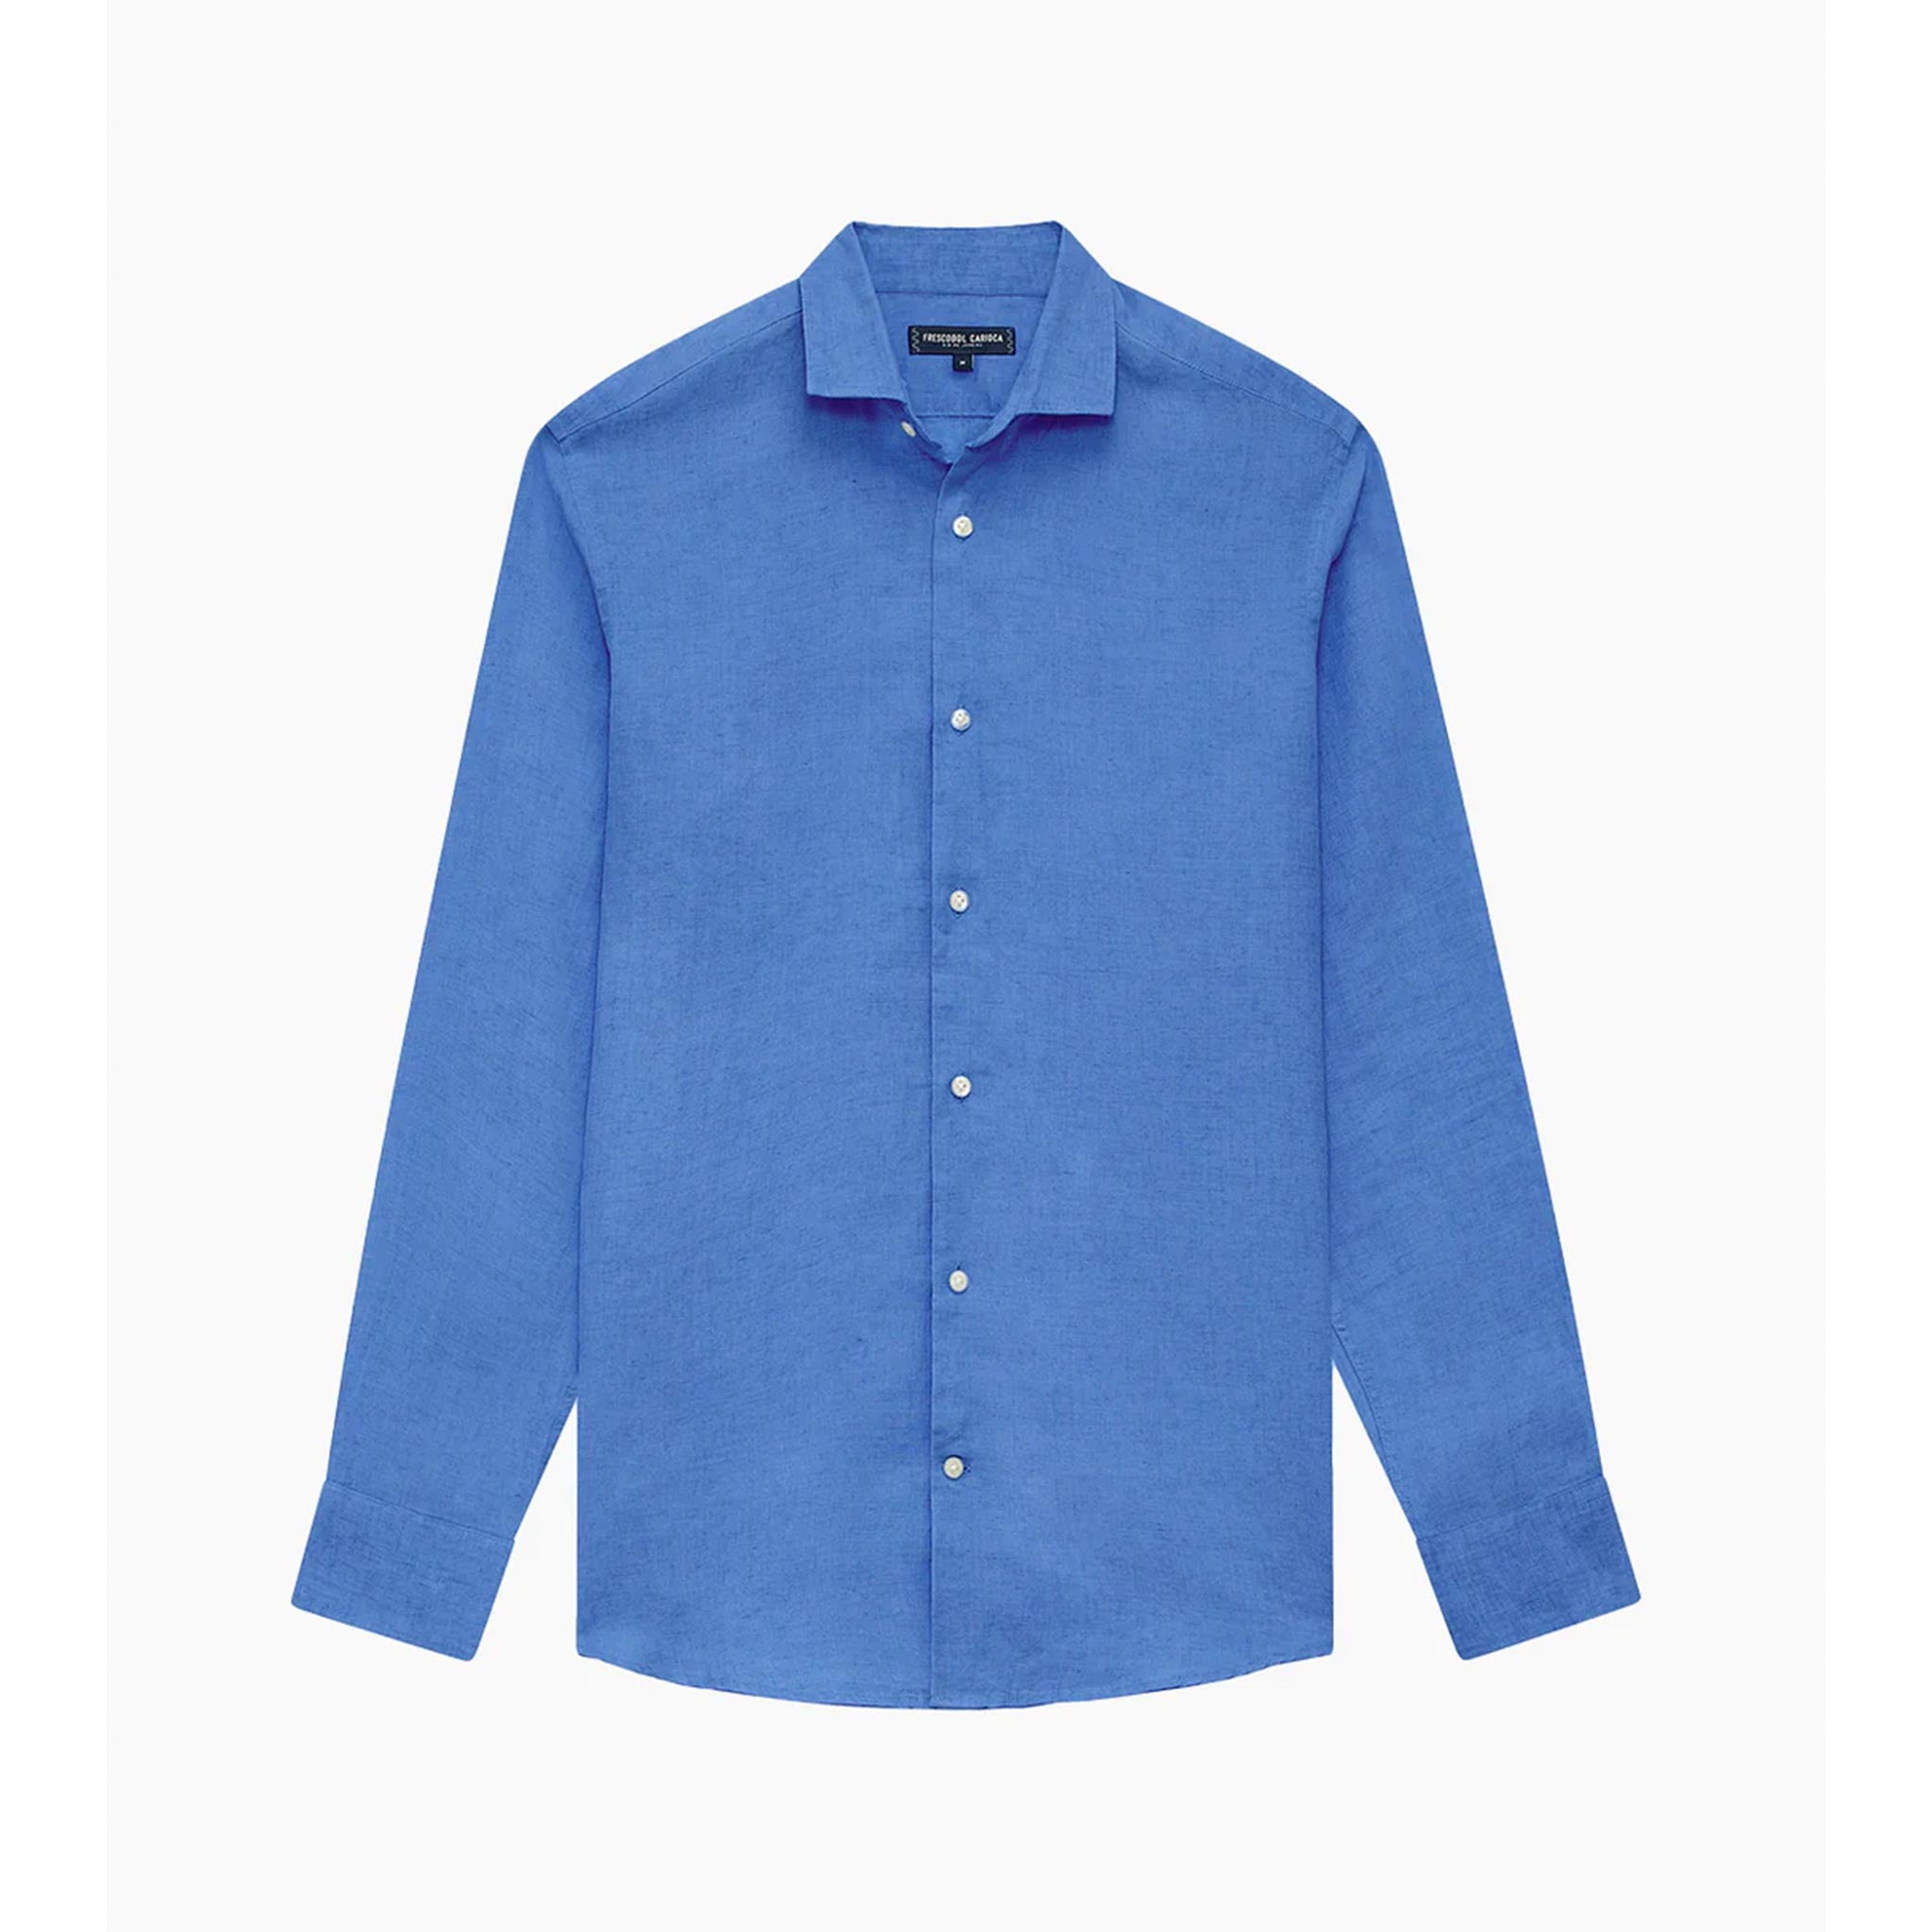 Antonio Linen Shirt in Chateau Blue